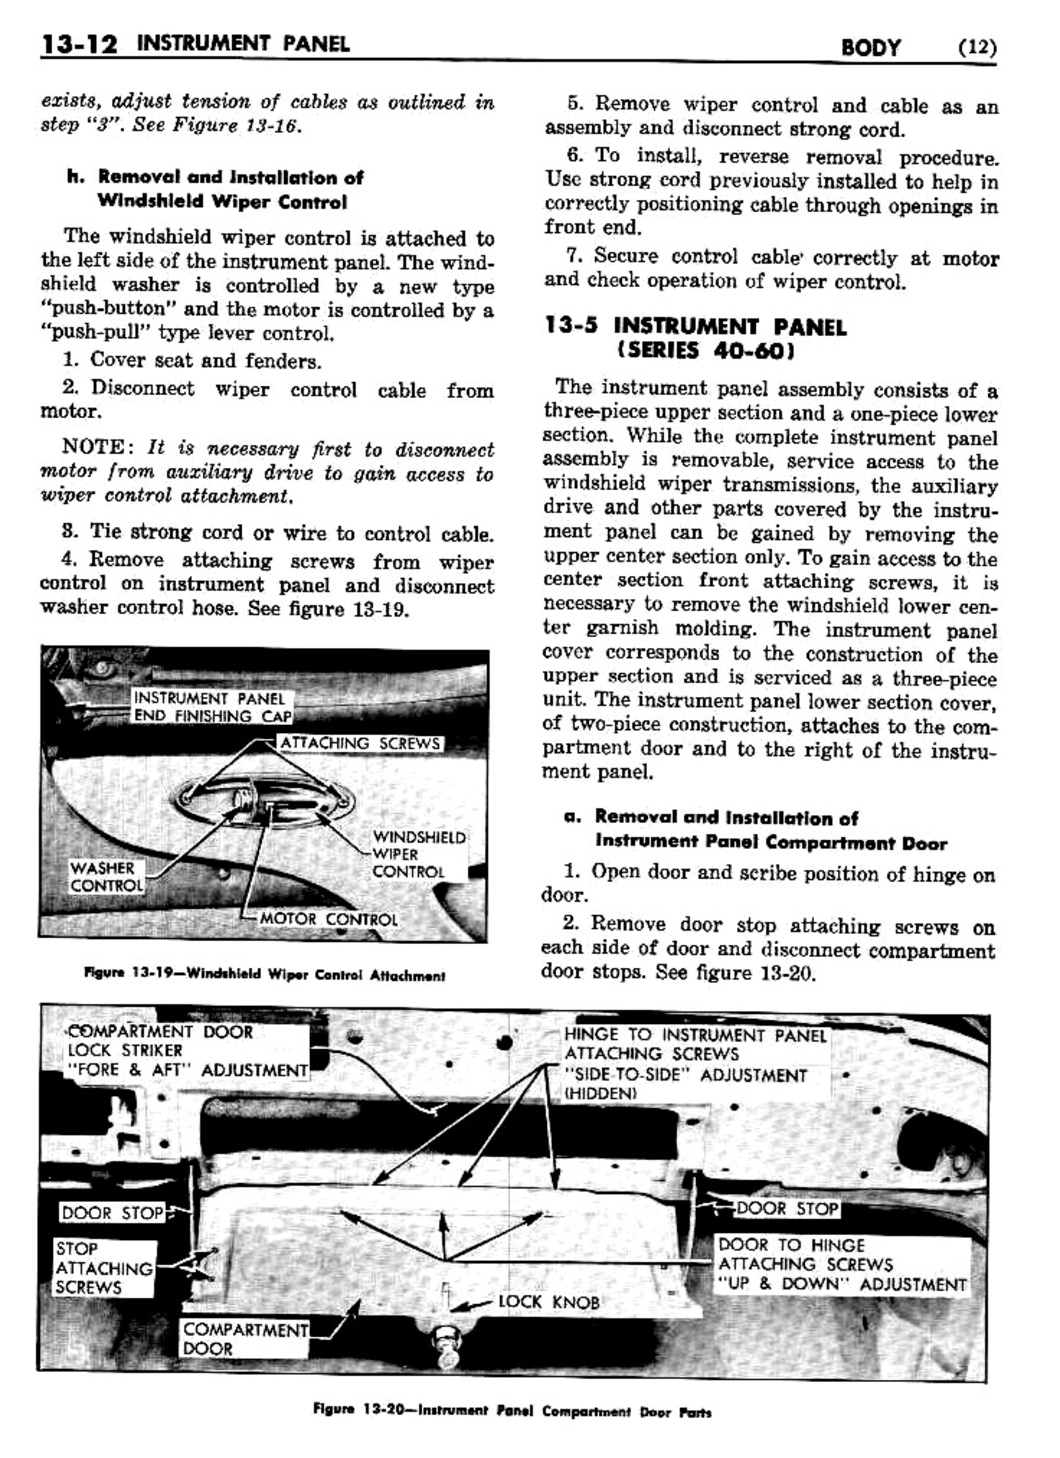 n_1957 Buick Body Service Manual-014-014.jpg